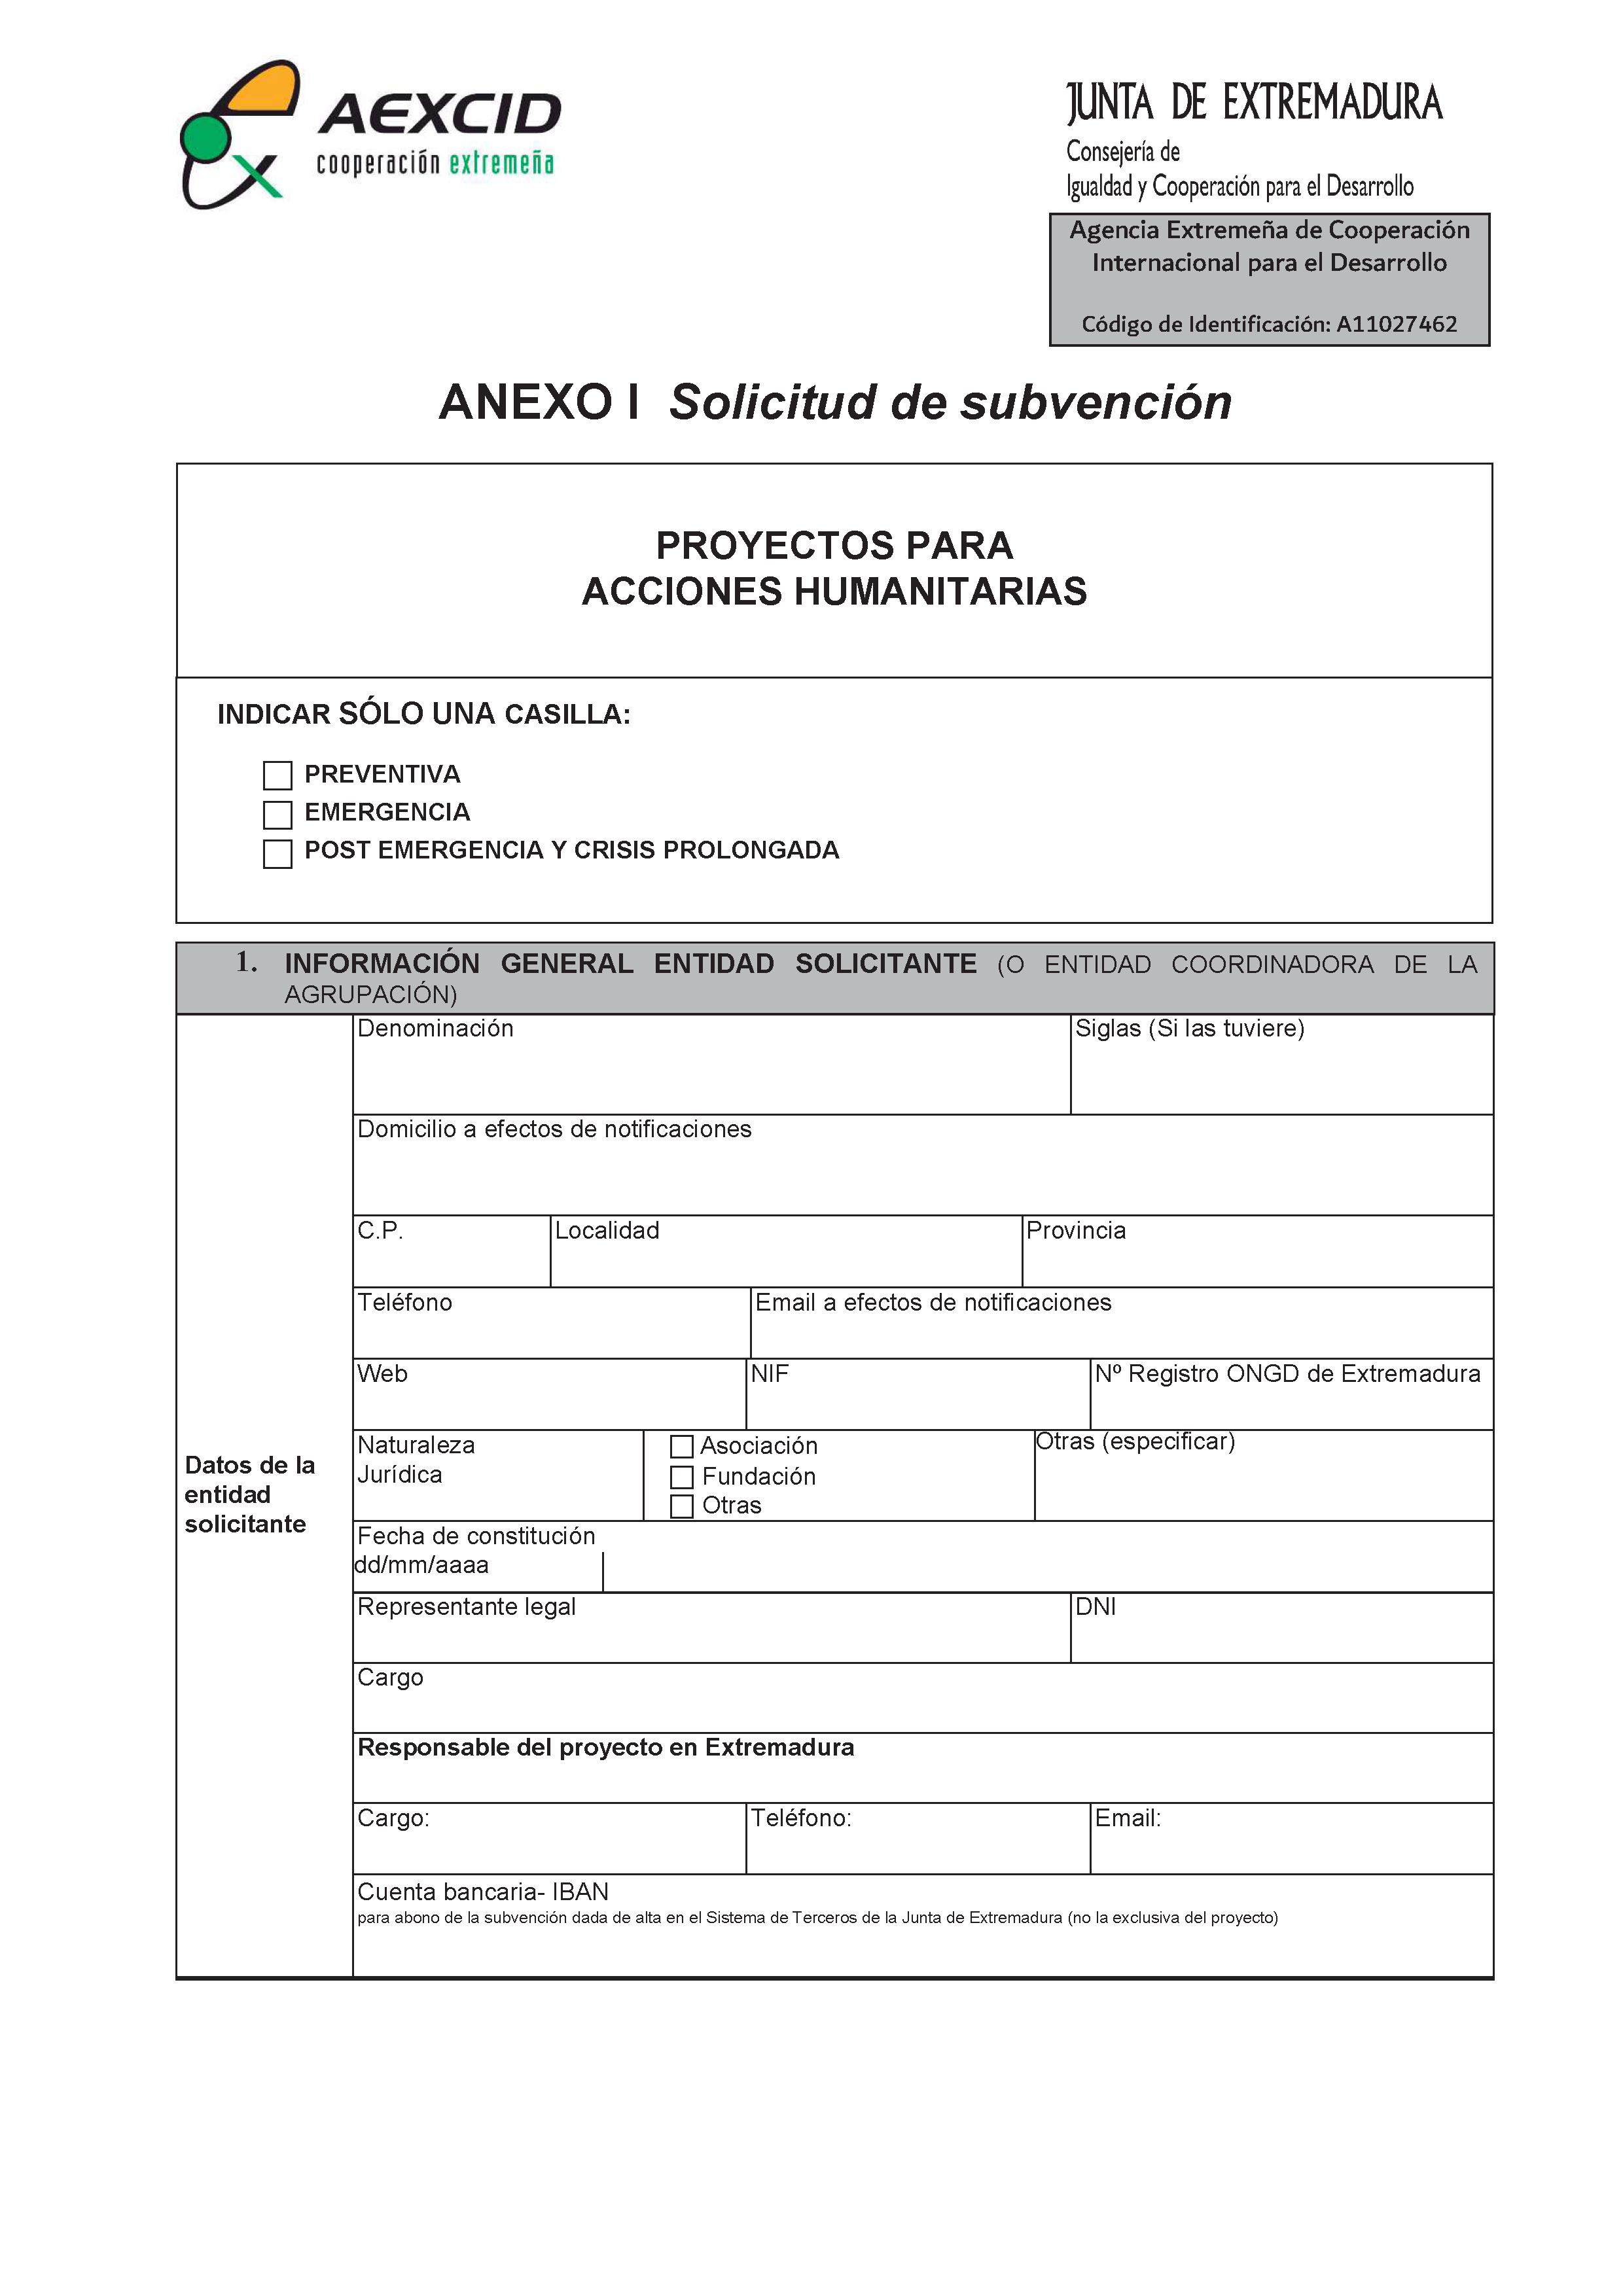 ANEXO I SOLICITUD DE SUBVENCION Pag 1